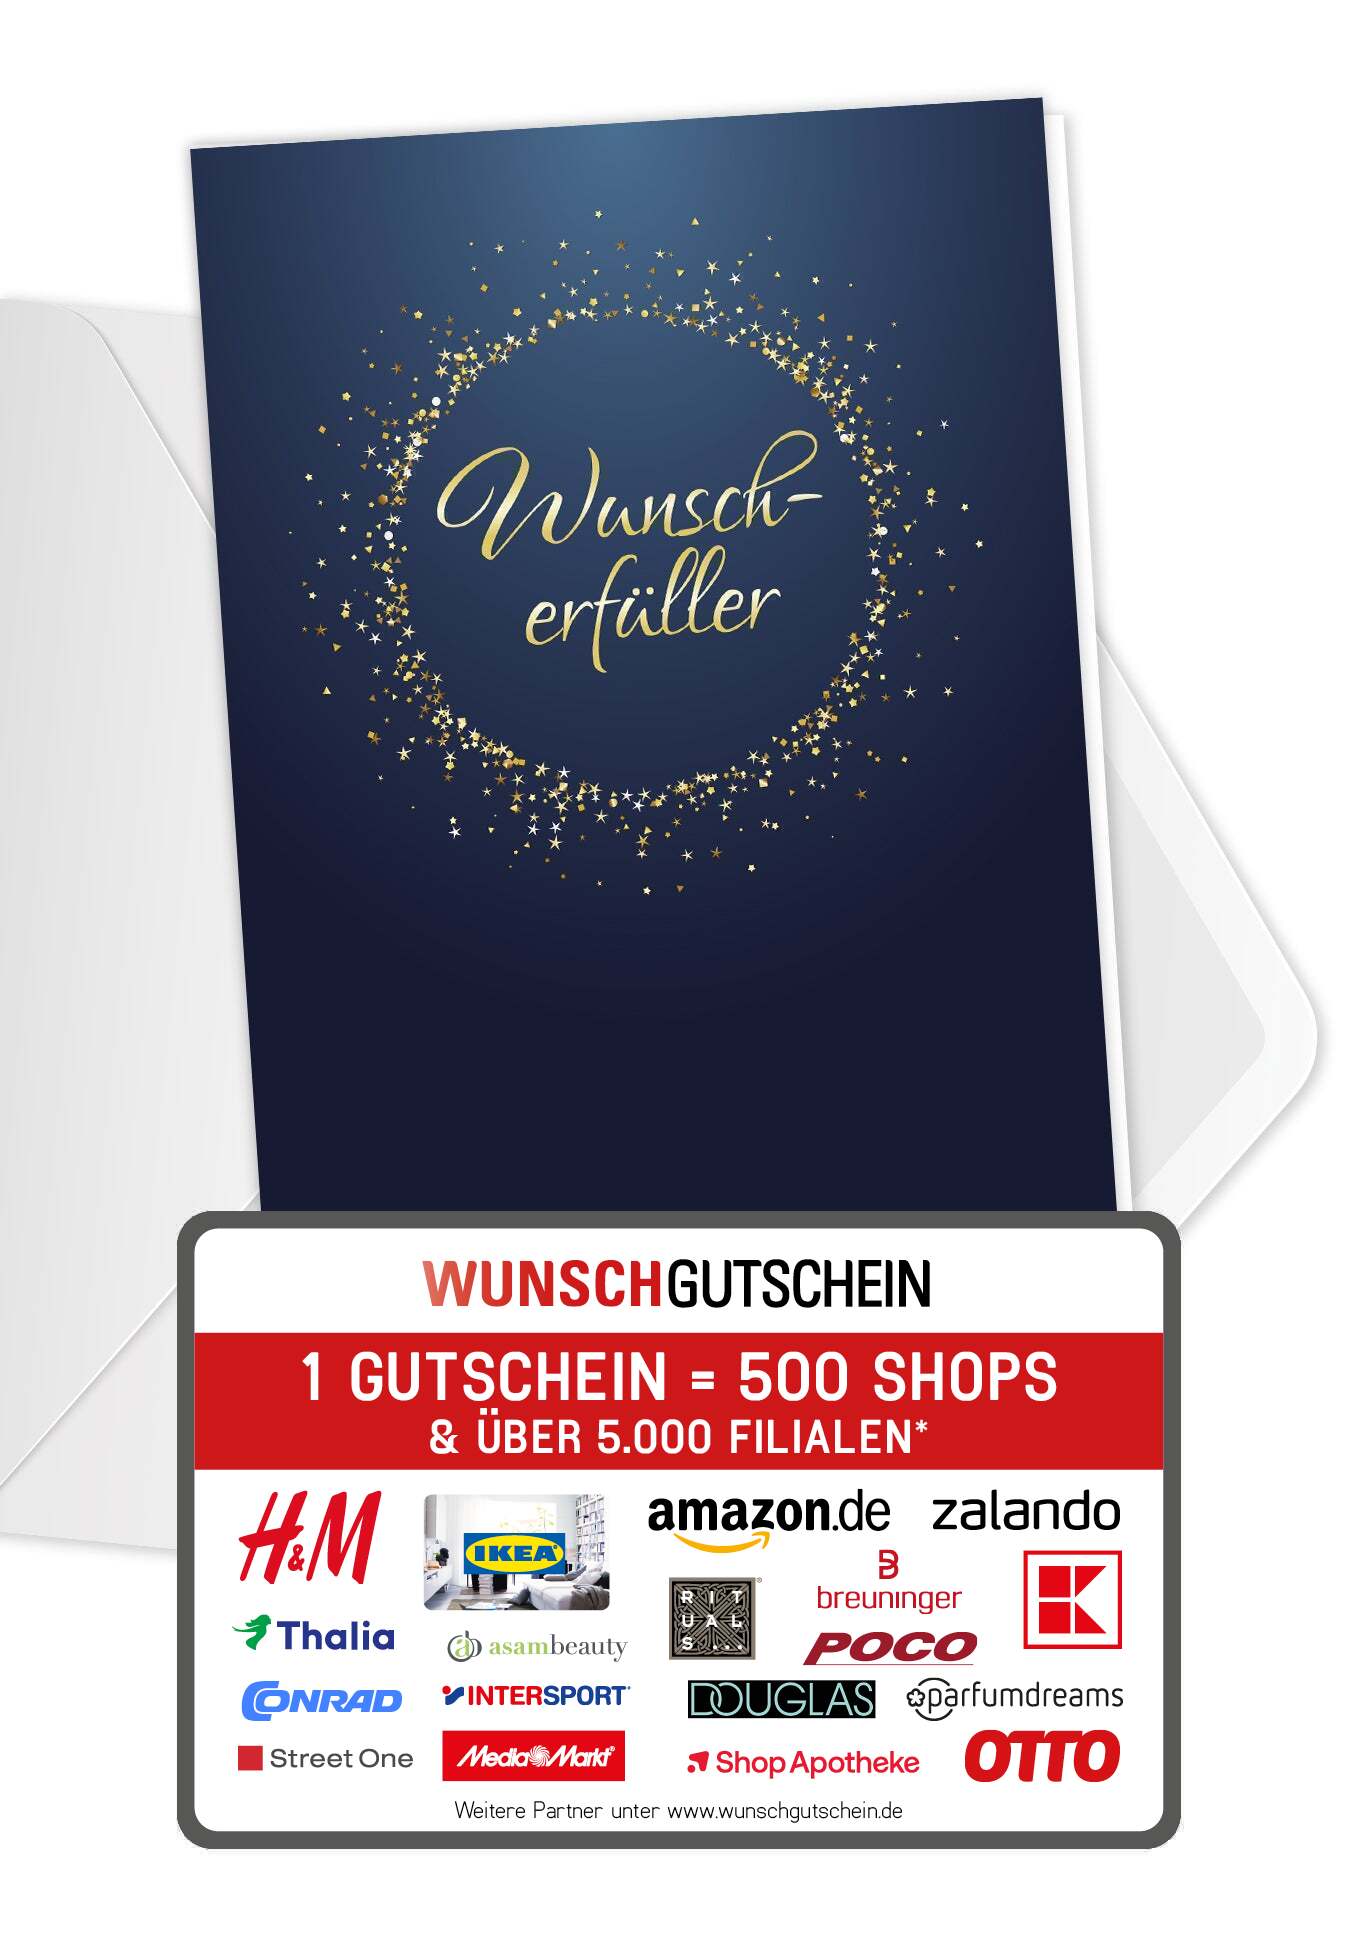 Wunscherfüller - Gold Blau (Gutscheinwert)